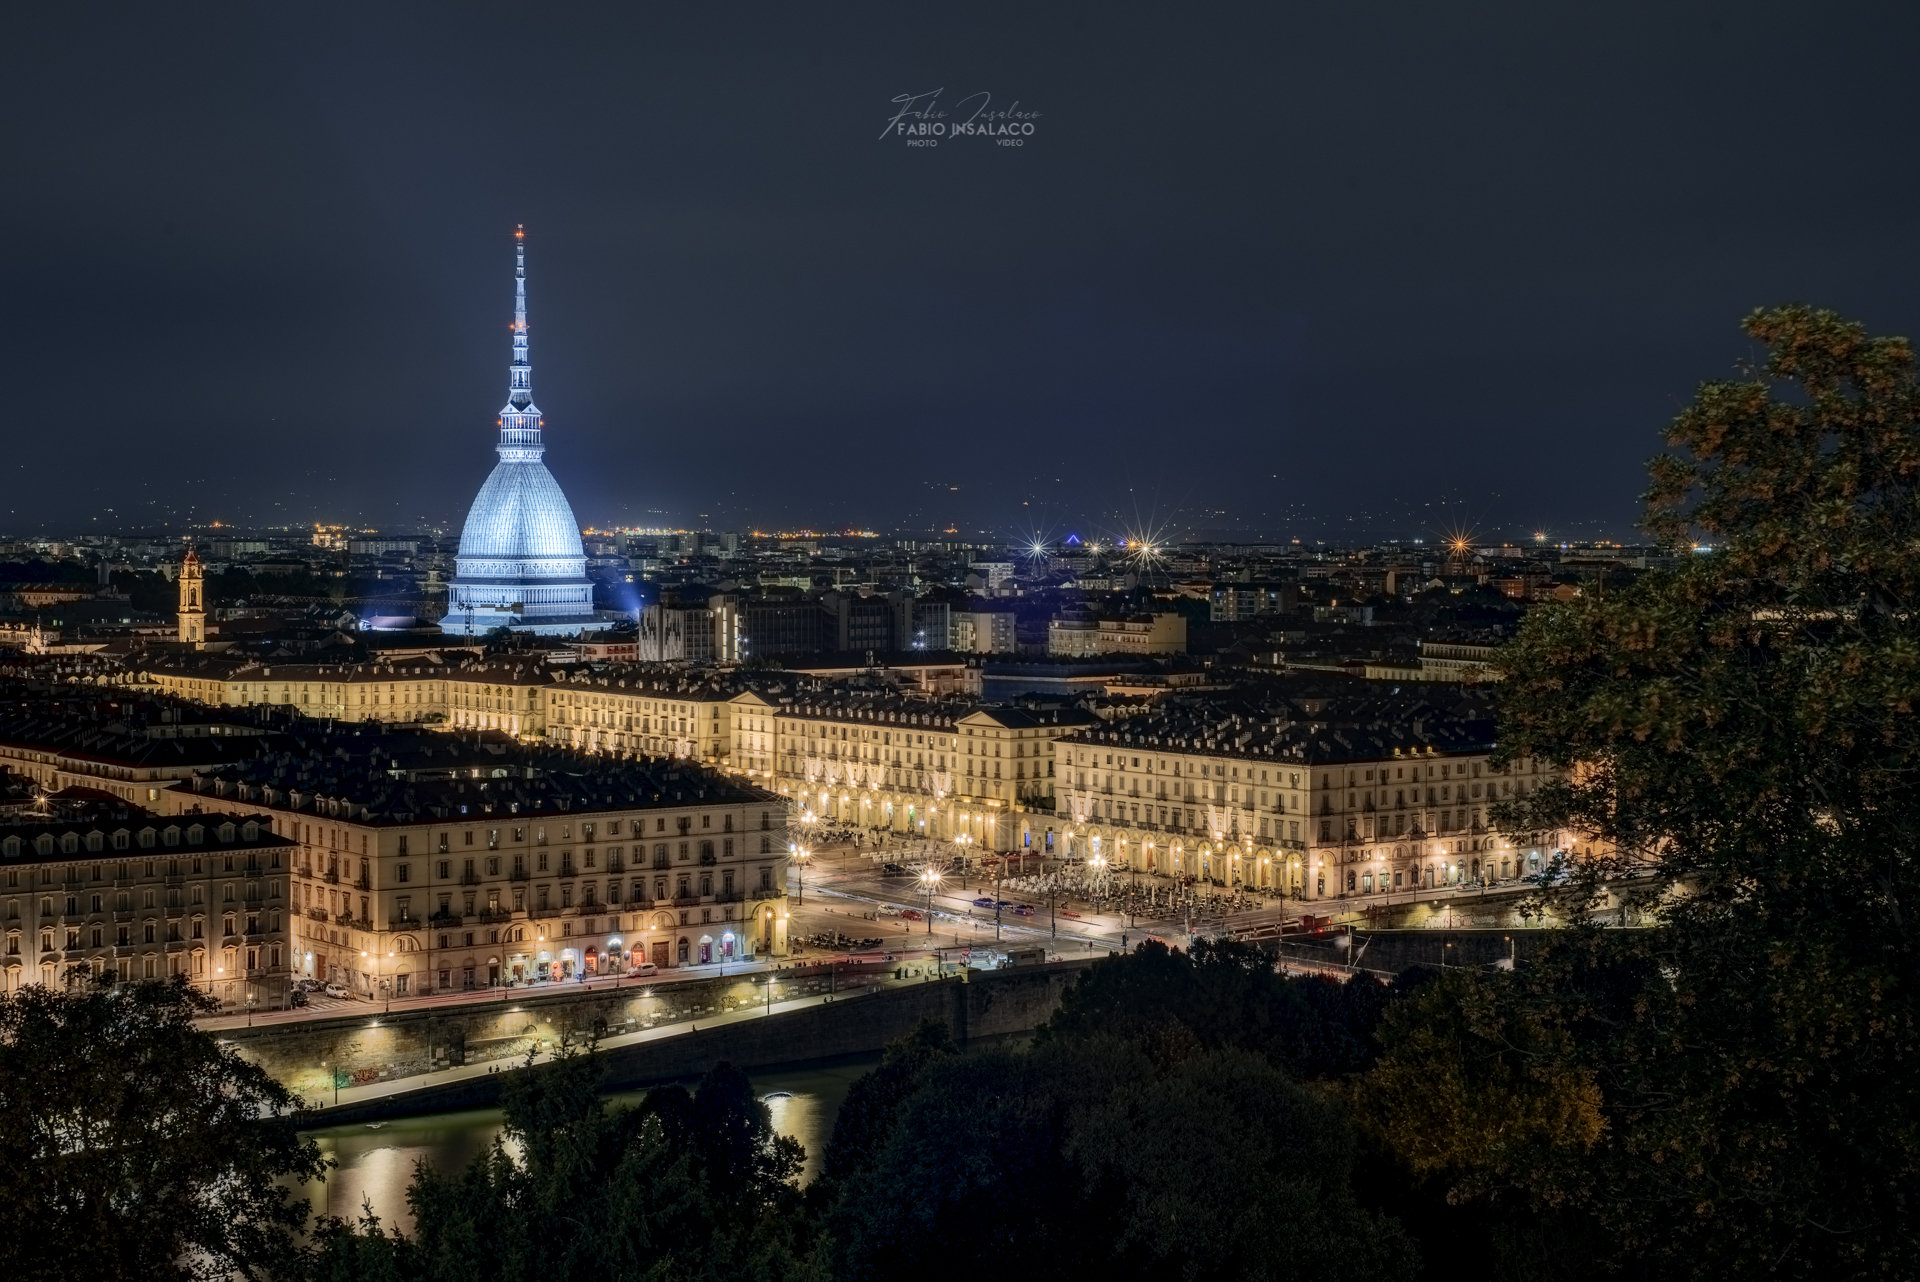 Turin by night...